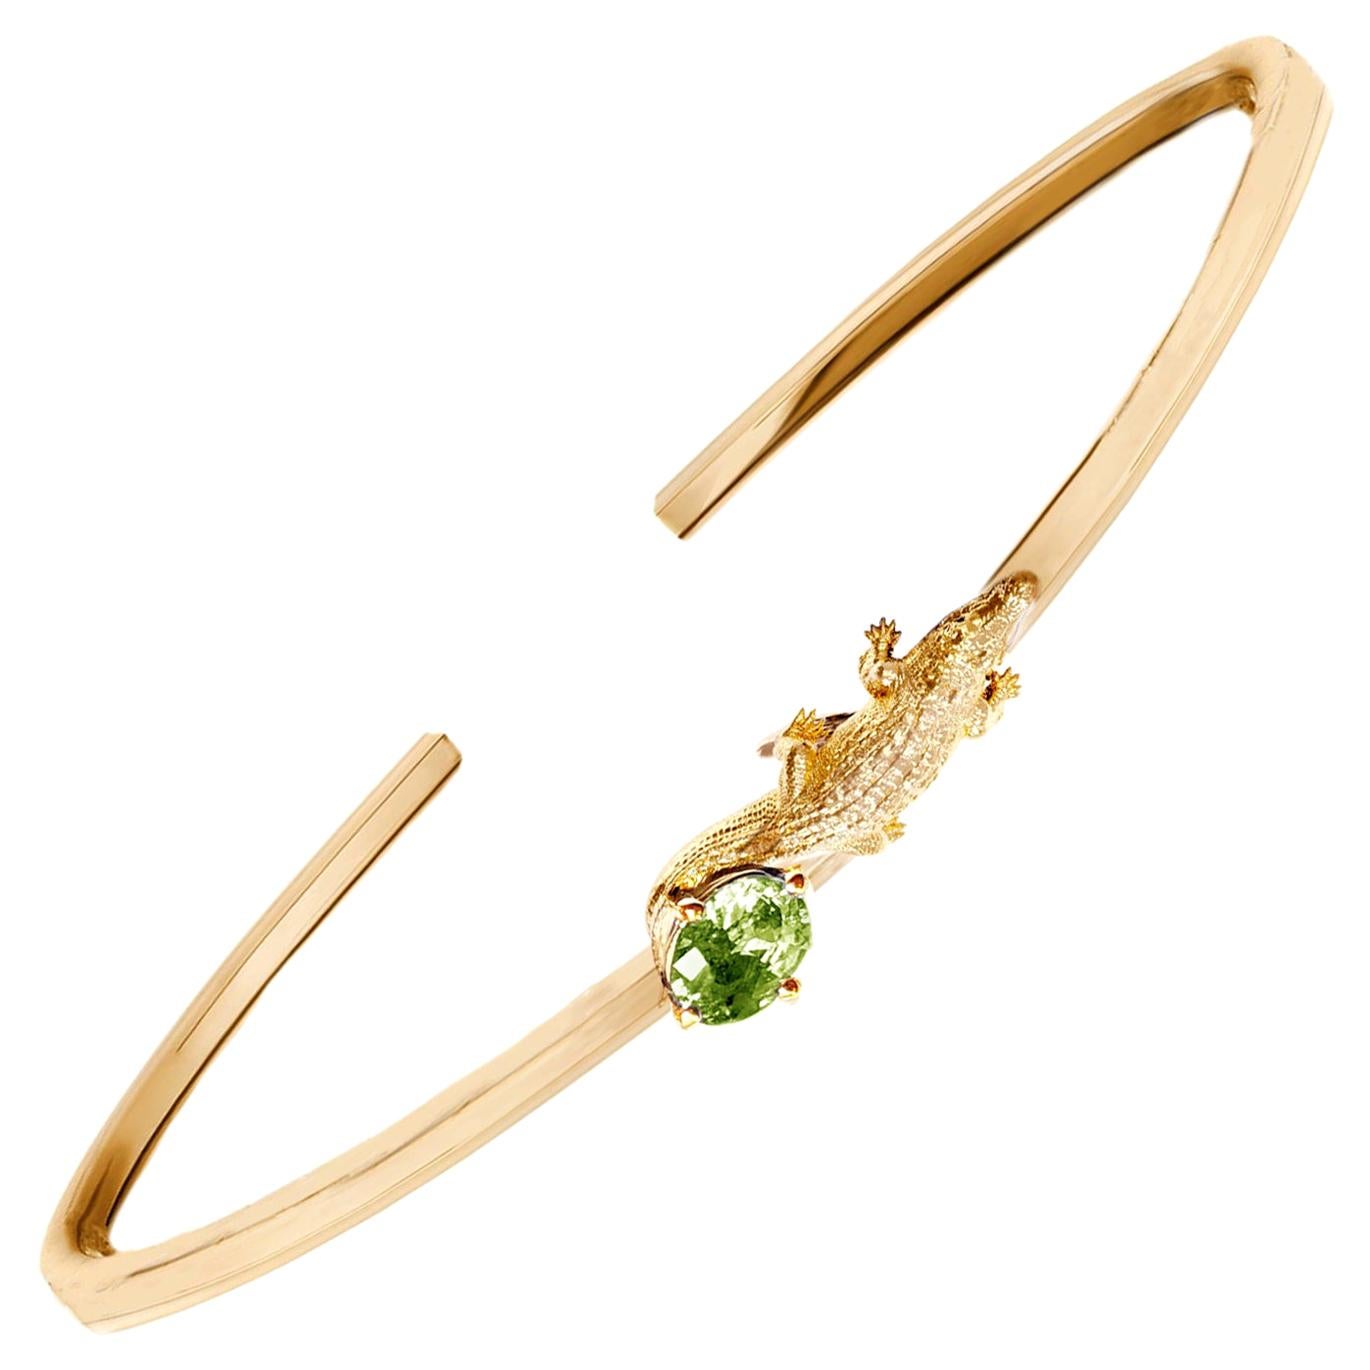 Eighteen Karat Rose Gold Mesopotamian Bracelet with Green Sapphire